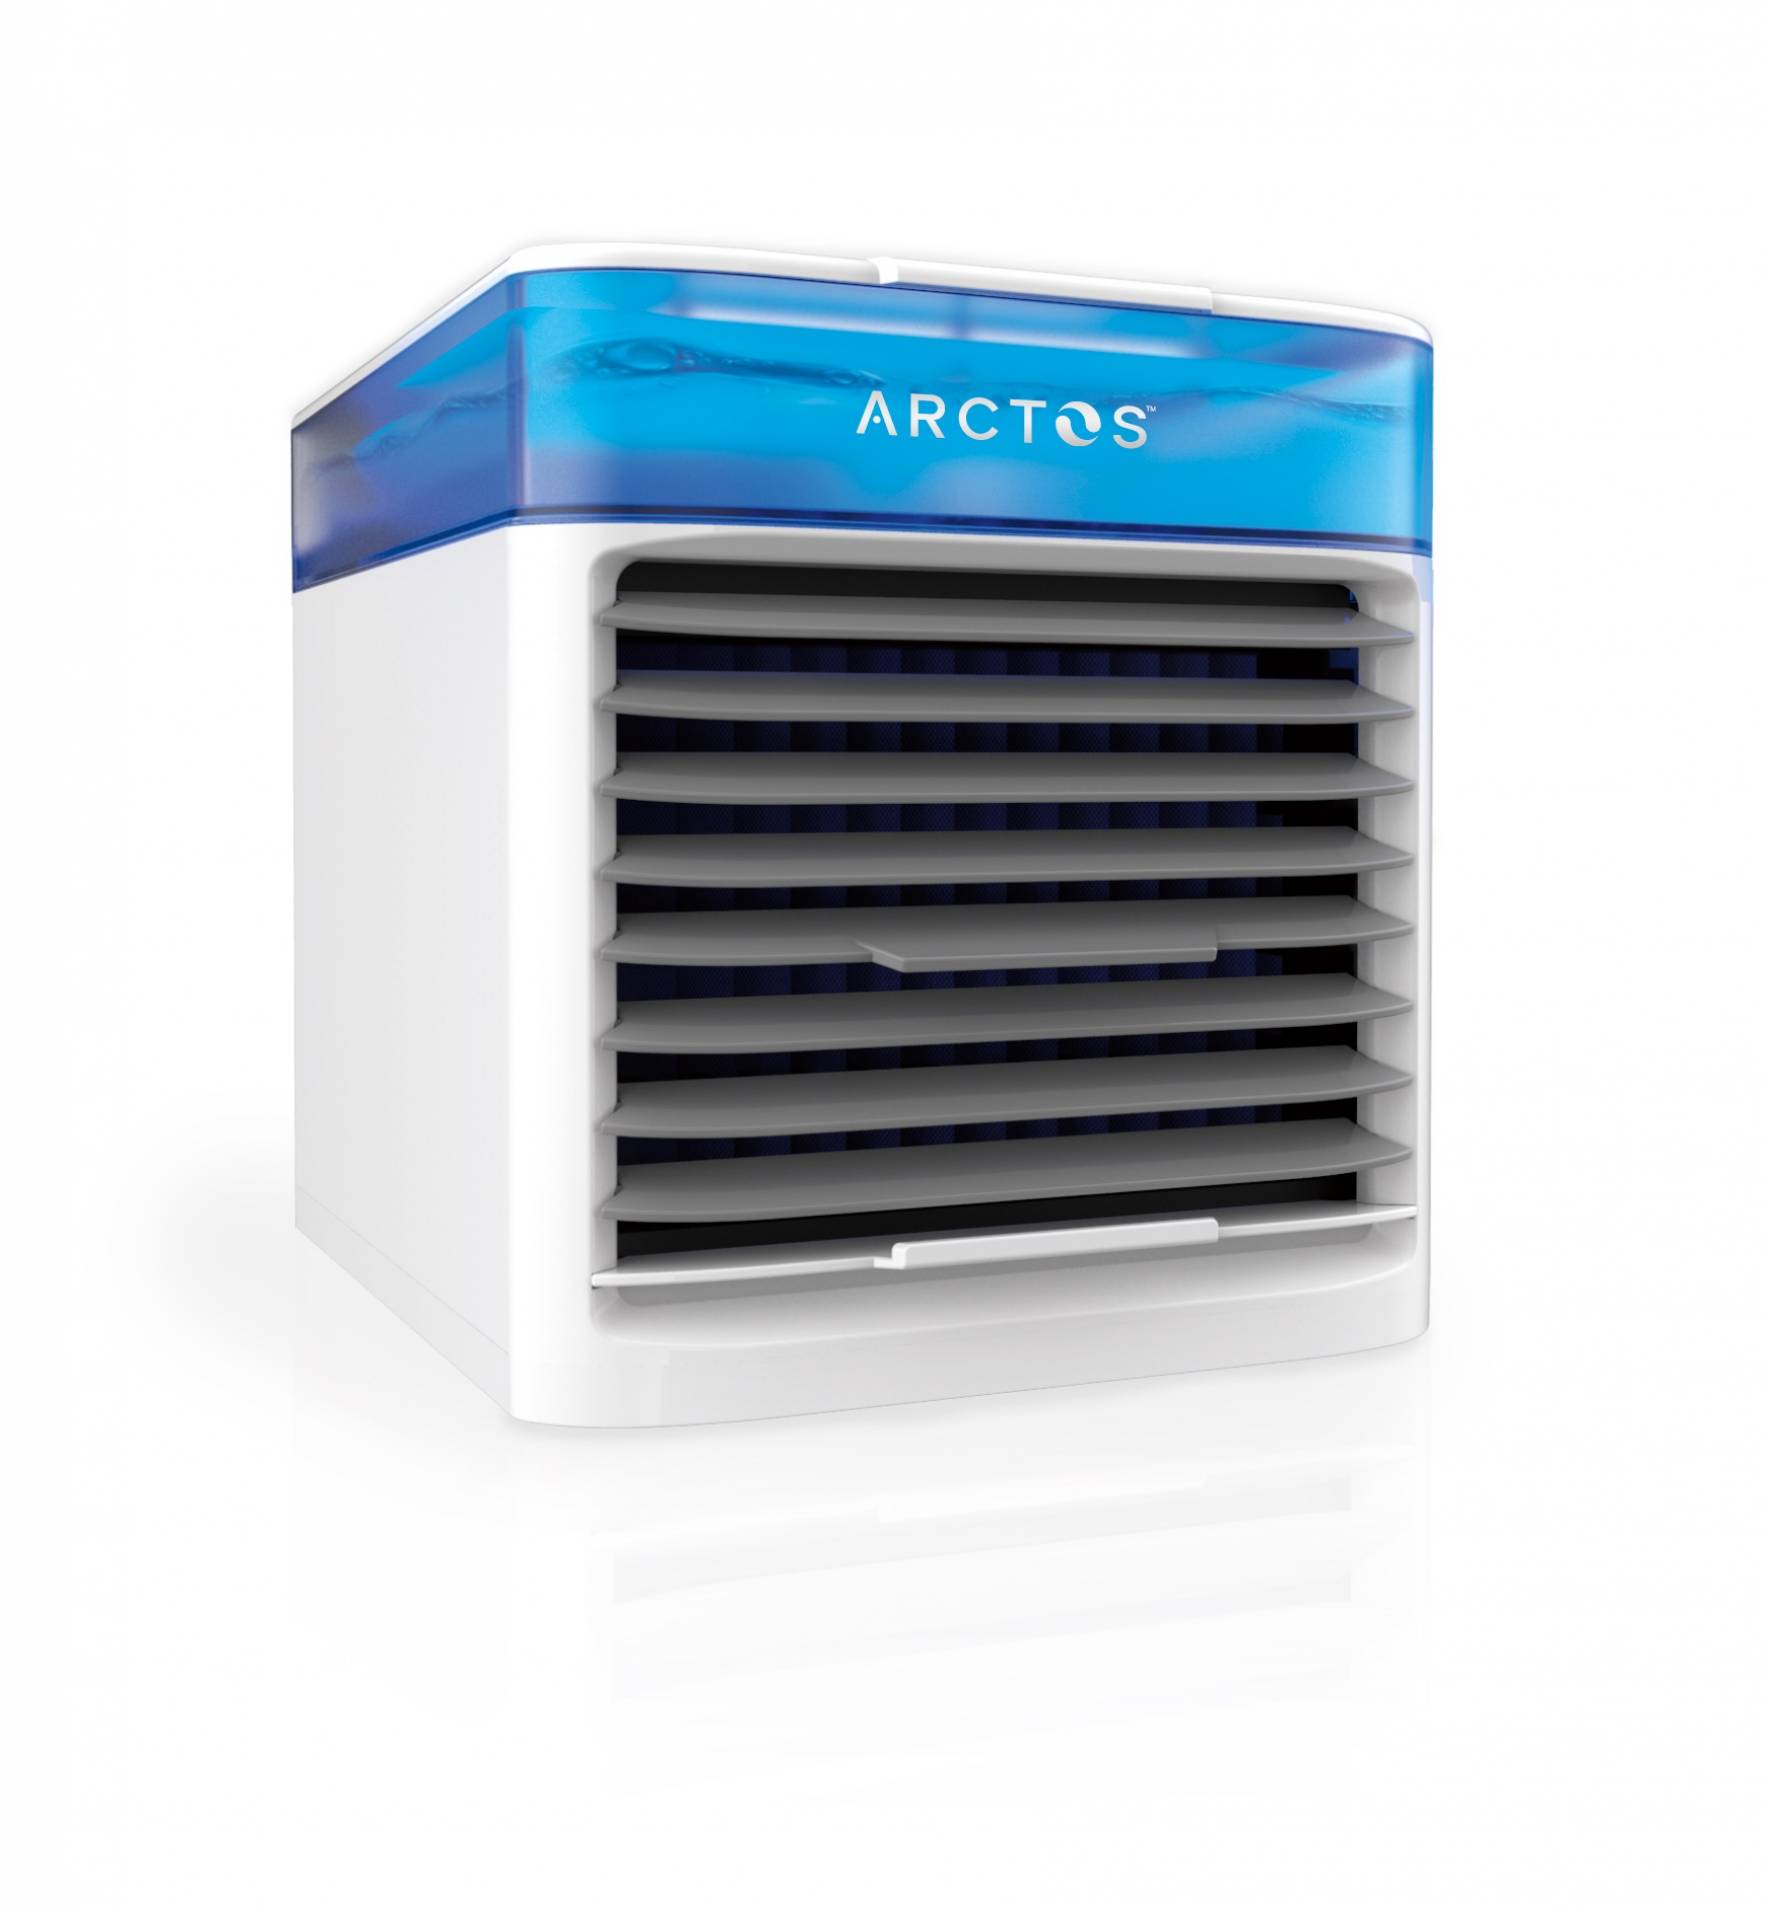 Arctos Personal Space Cooler Reviews